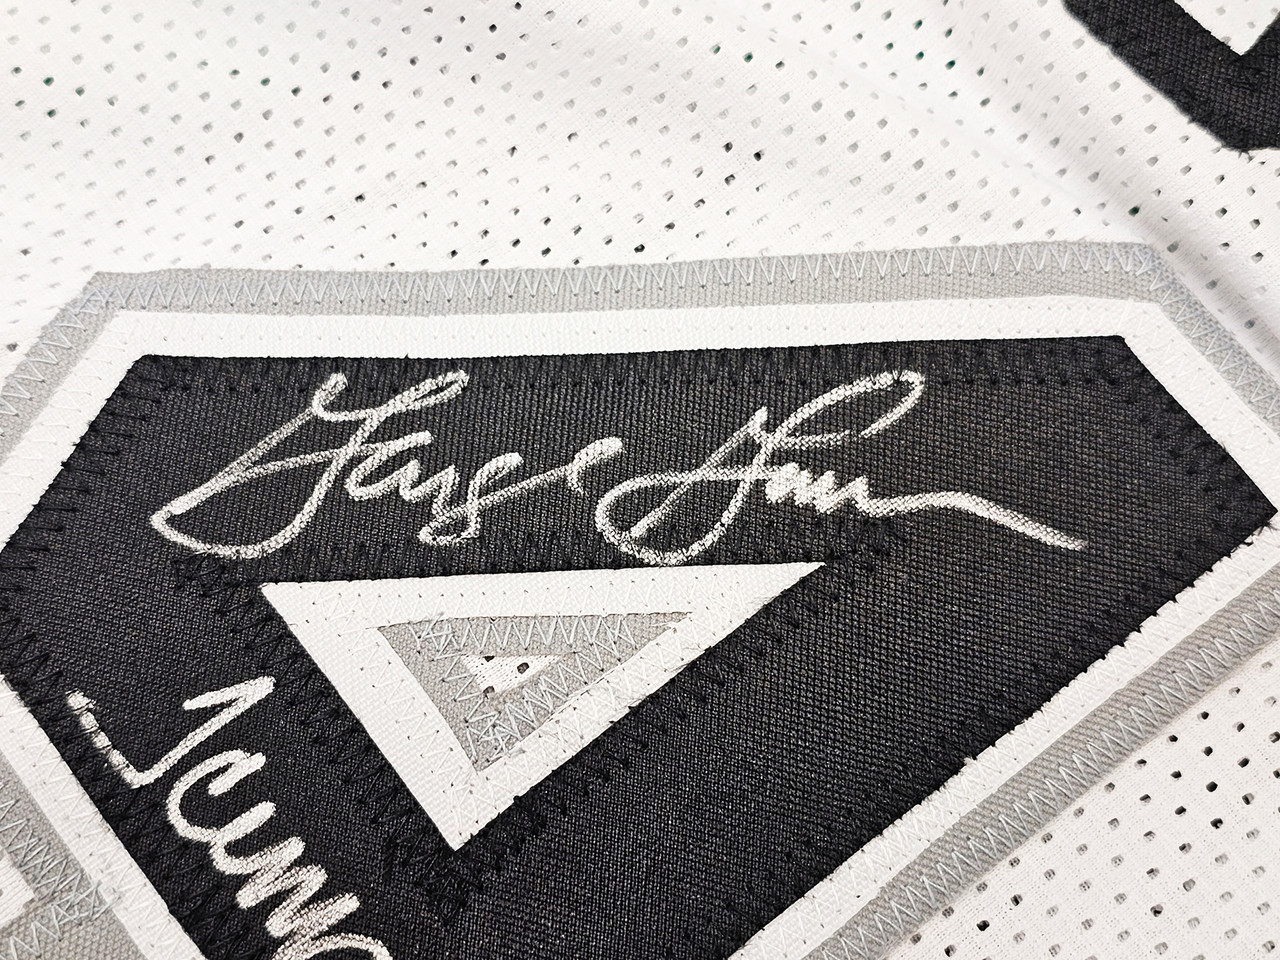 George Gervin Iceman Autographed San Antonio Custom Black Basketball Jersey  JSA